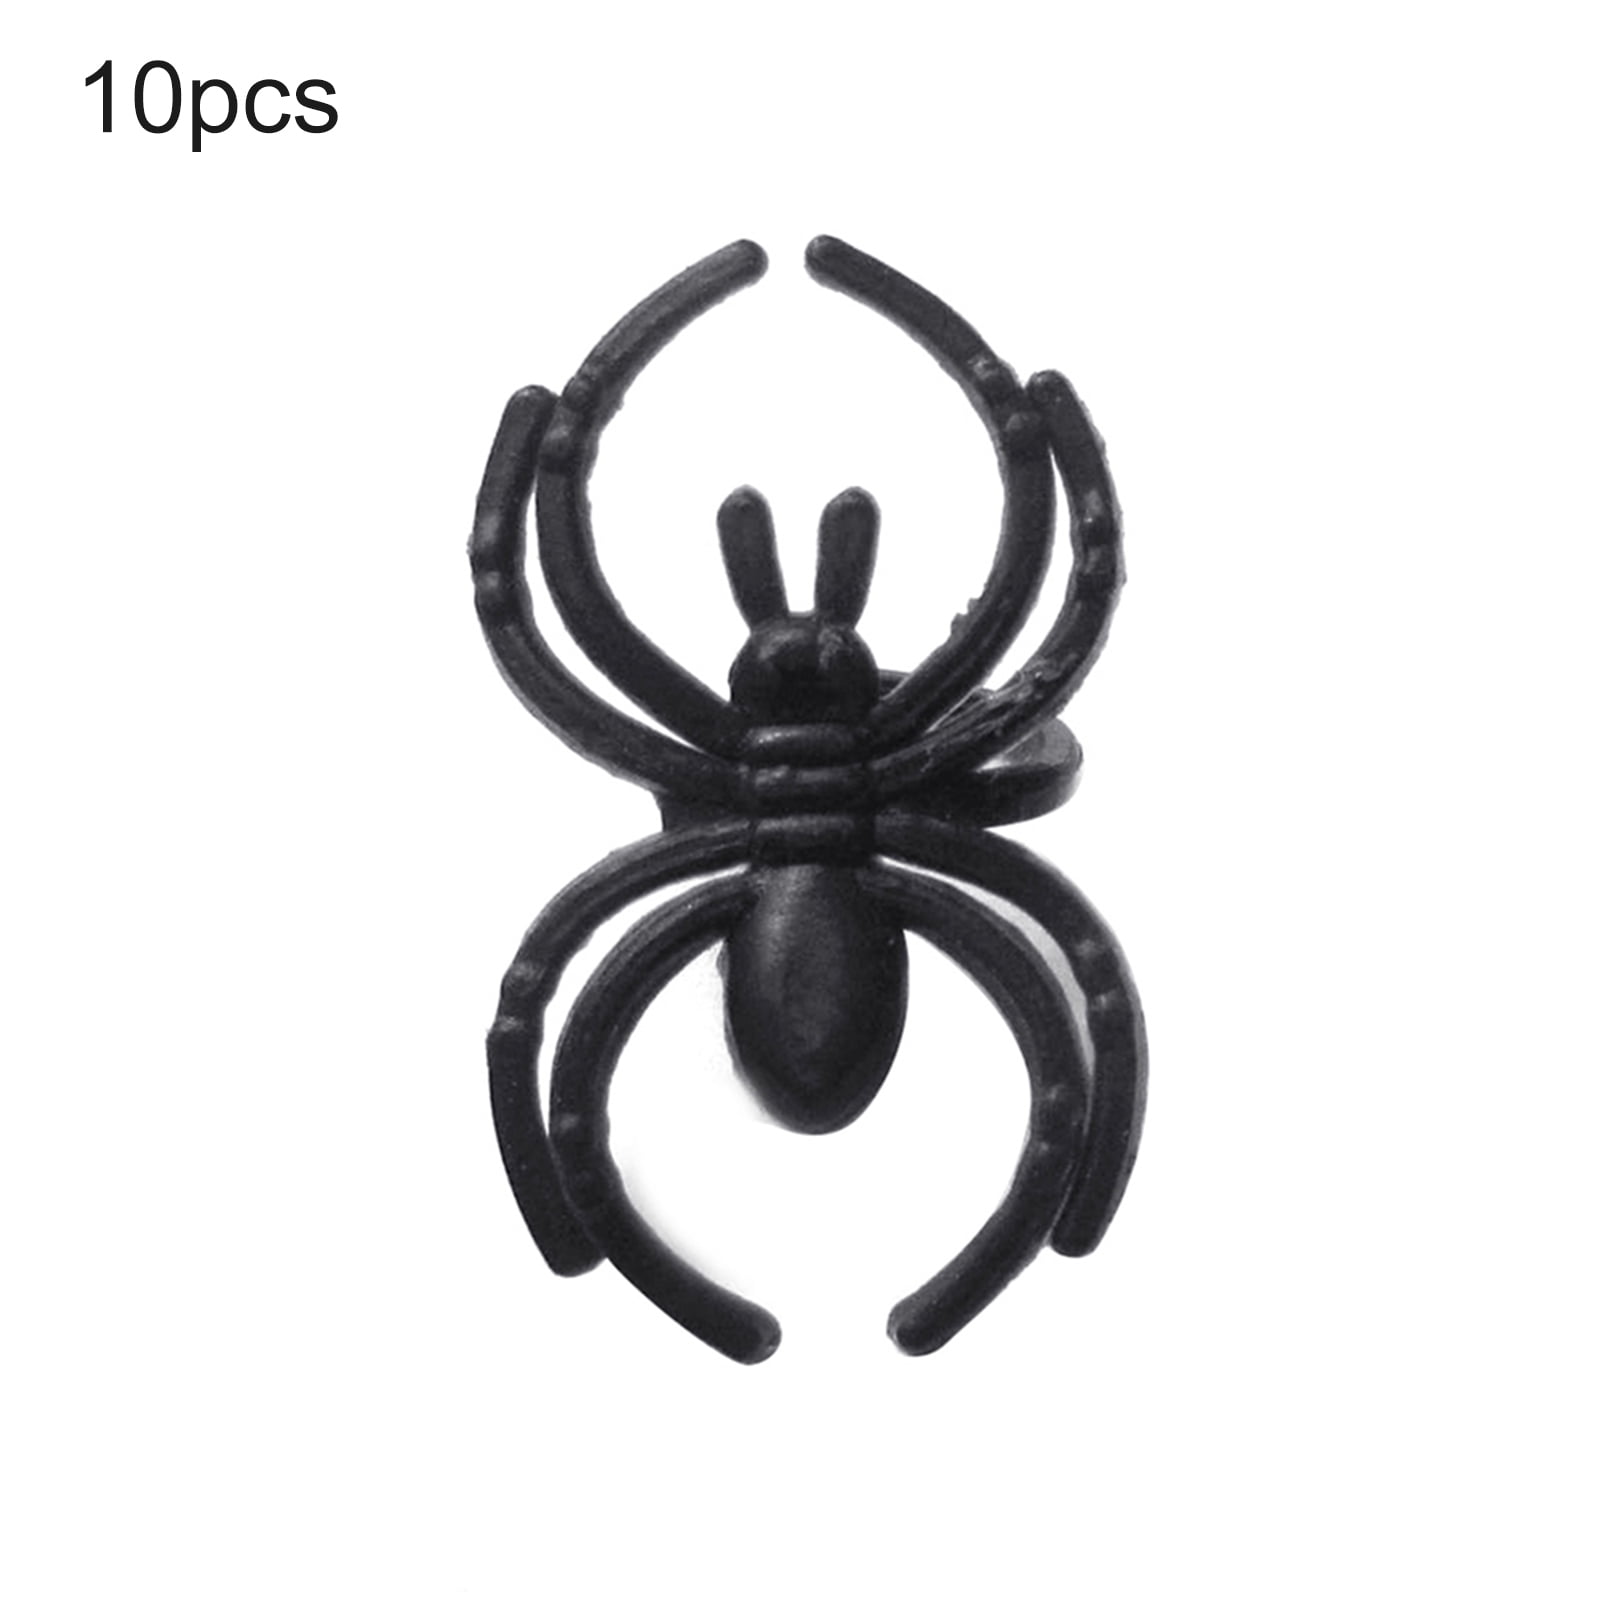 Spider Decor Ring